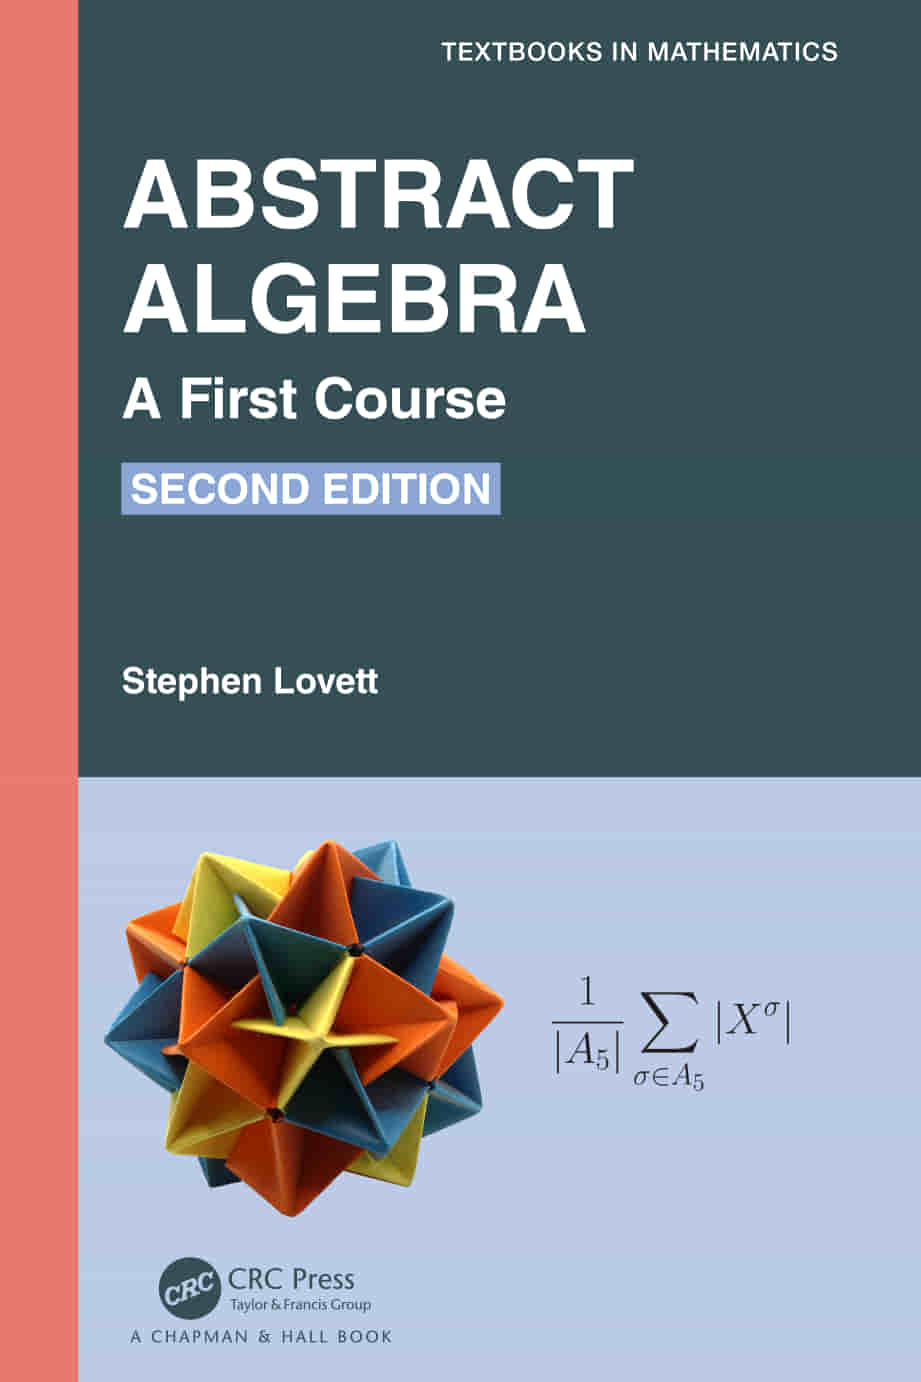 abstract algebra phd